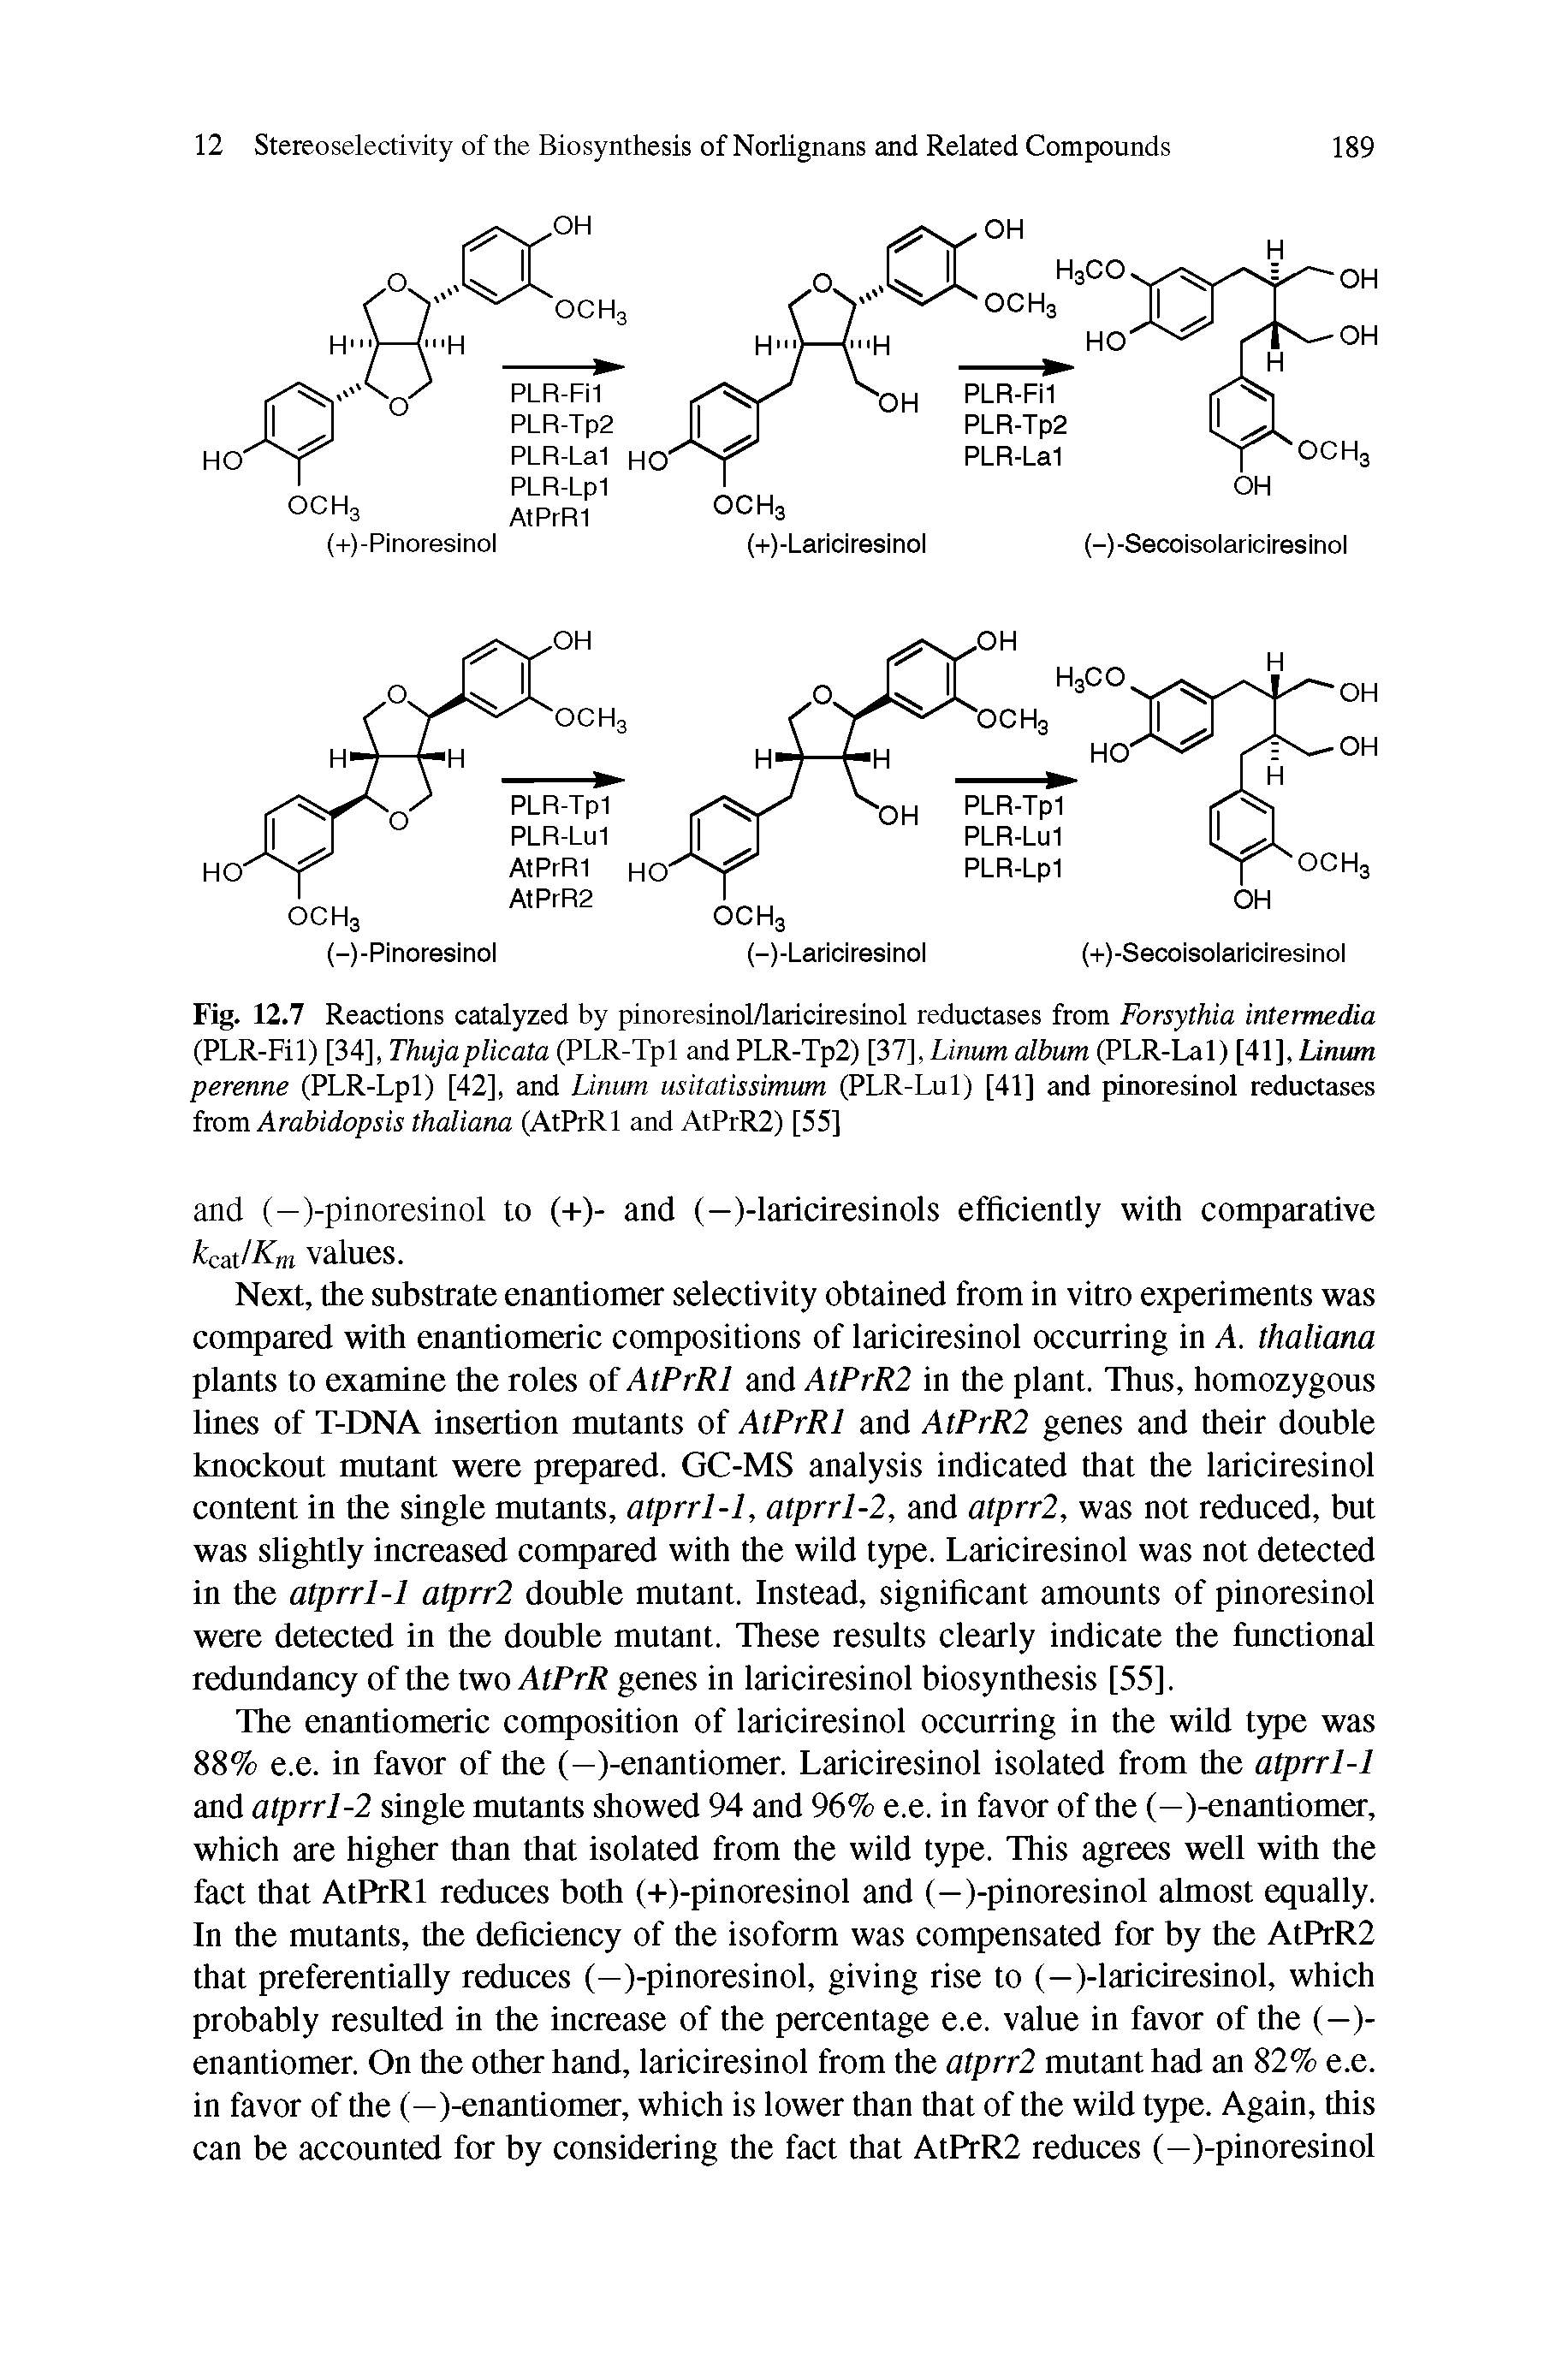 Fig. 12.7 Reactions catalyzed by pinoresinol/lariciresinol reductases from Forsythia intermedia (PLR-Fil) [34], Thujaplicata (PLR-Tpl and PLR-Tp2) [37], Liram album (PLR-Lal) [41], Linum perenne (PLR-Lpl) [42], and Linum usitatissimum (PLR-Lul) [41] and pinoresinol reductases from Arabidopsis thaliana (AtPrRl and AtPrR2) [55]...